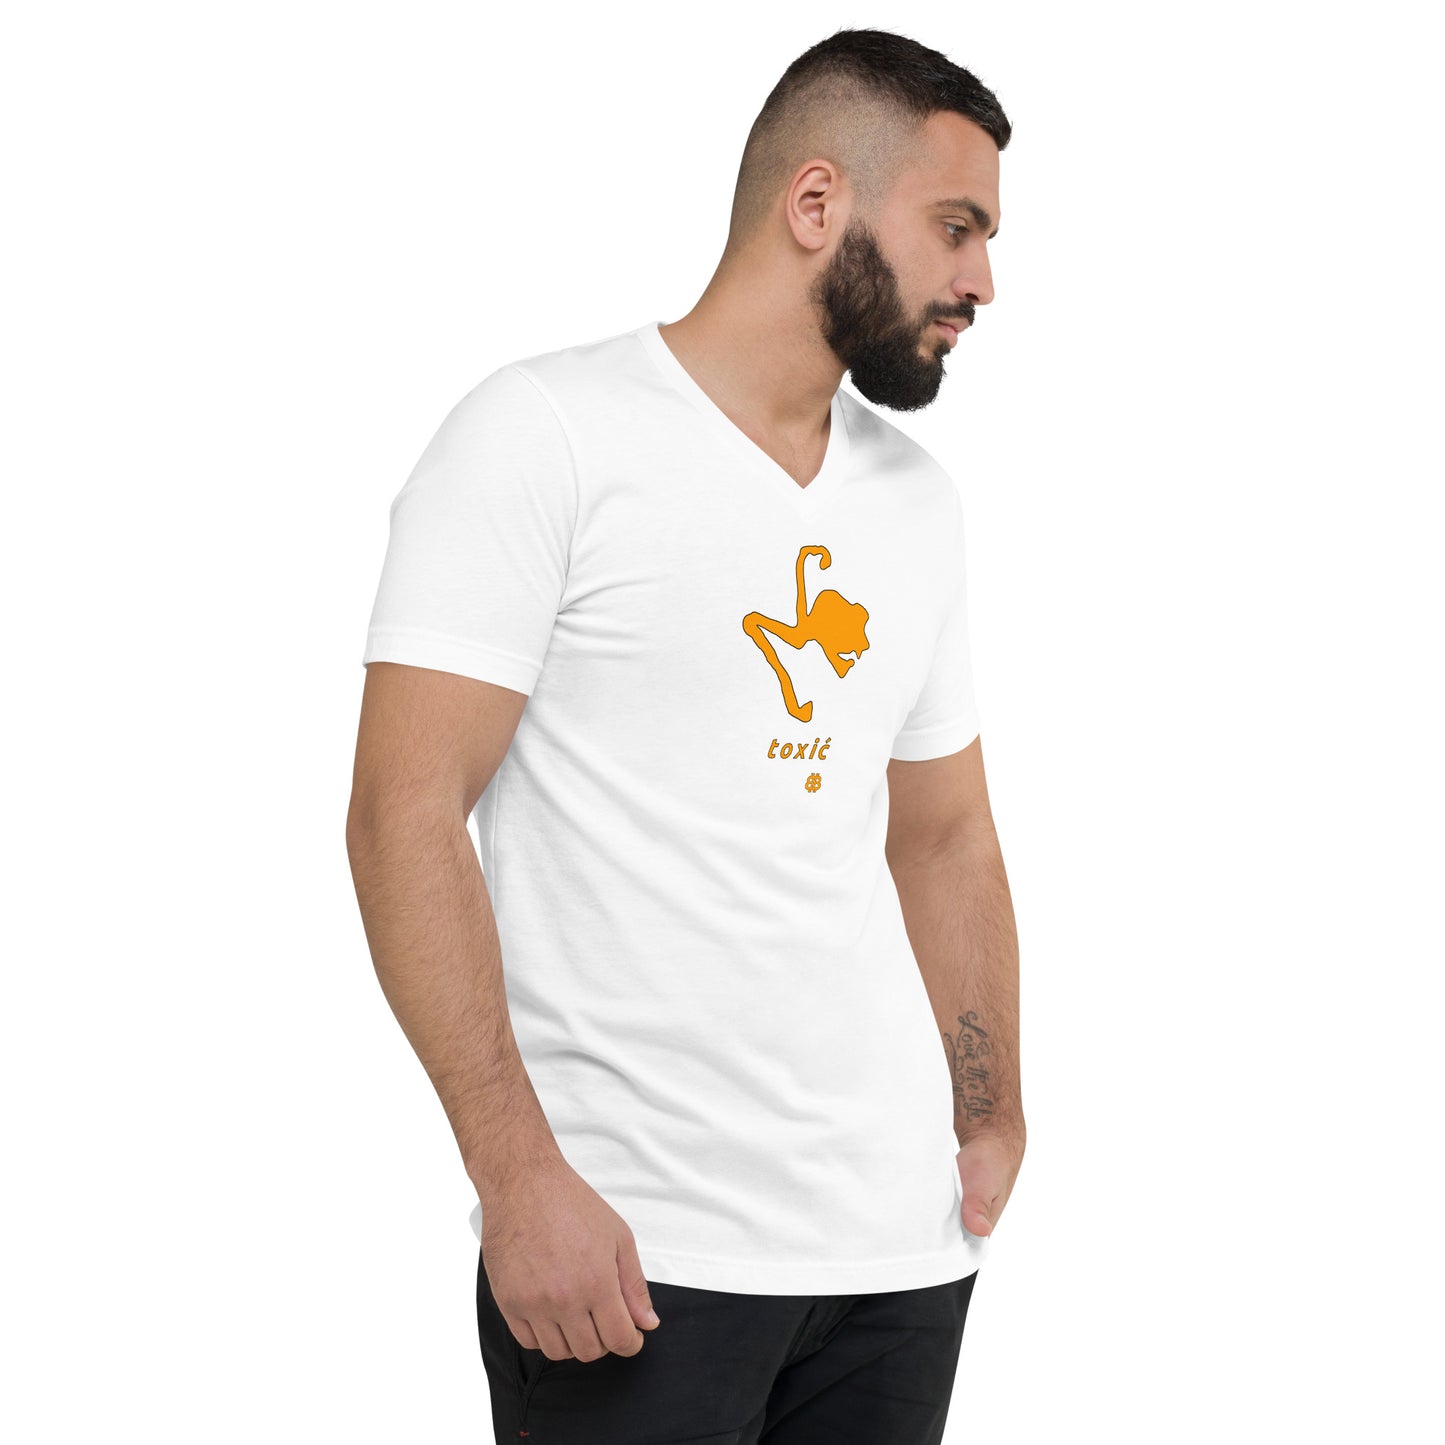 Unisex Short Sleeve V-Neck T-Shirt "Toxić"